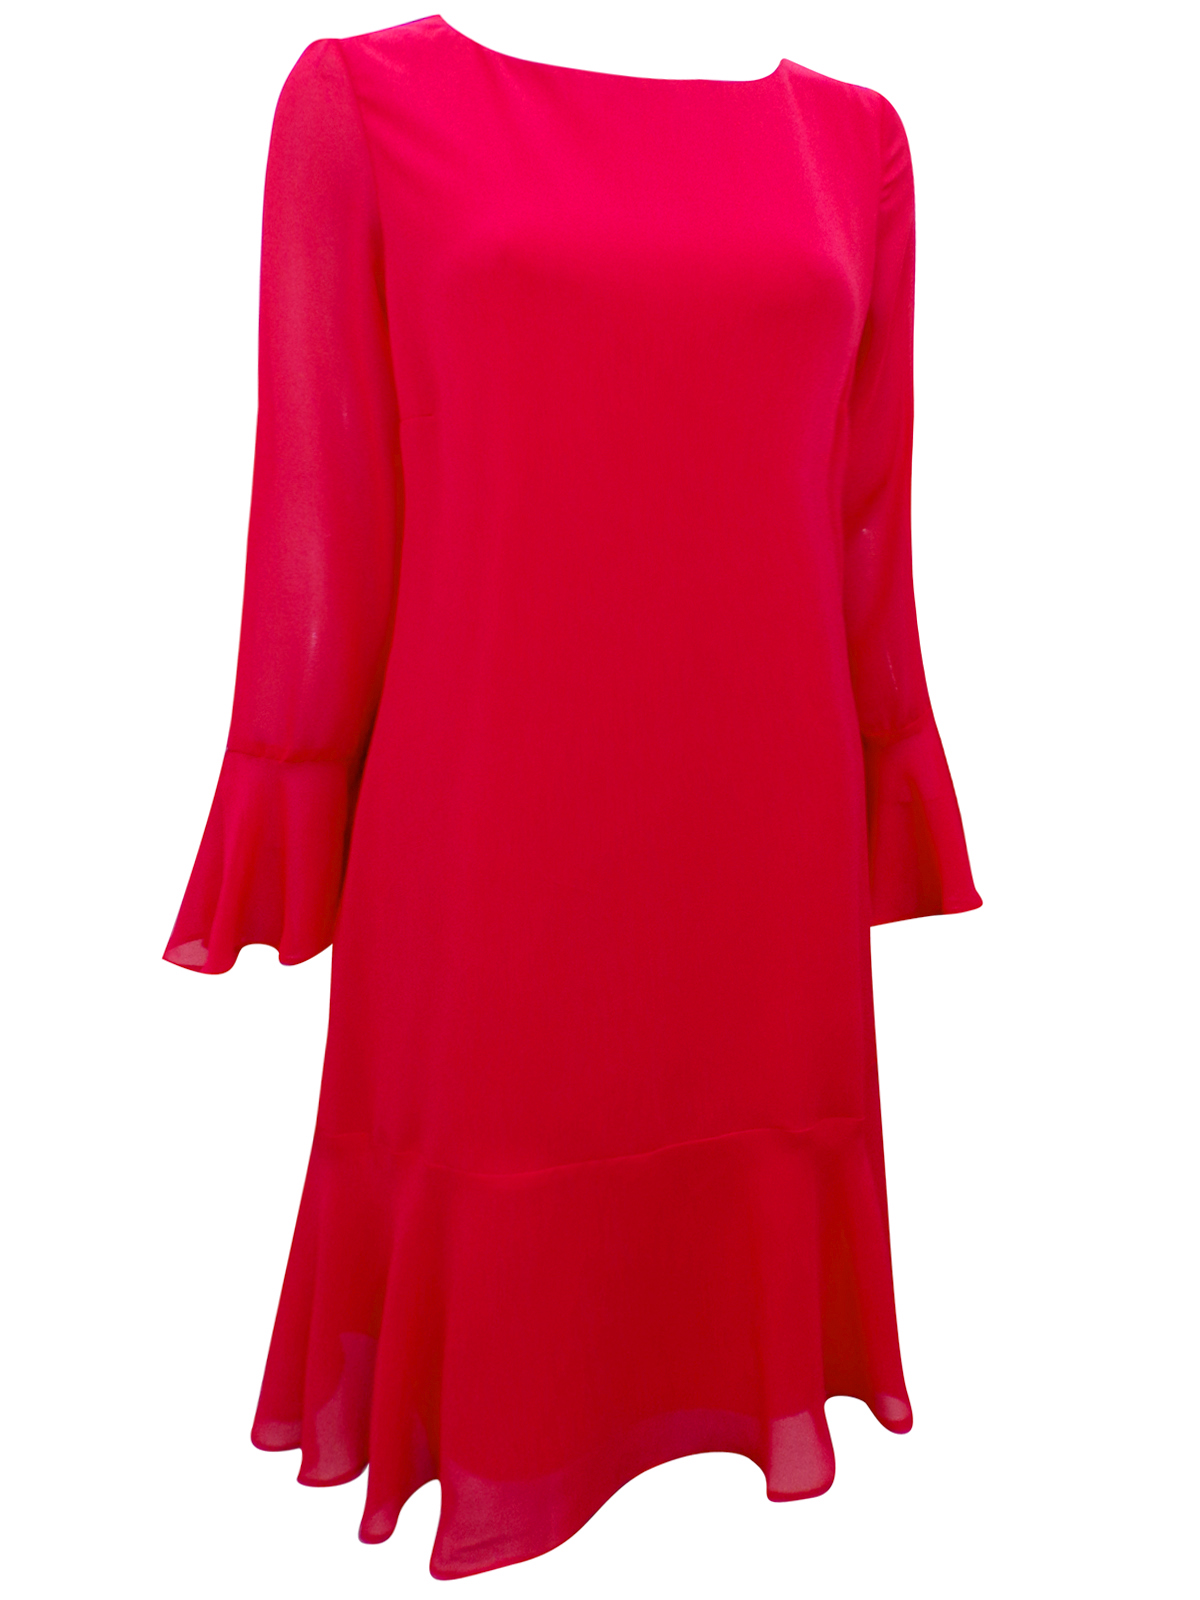 W4llis RED Flute Sleeve Shift Dress - Size 8 to 20